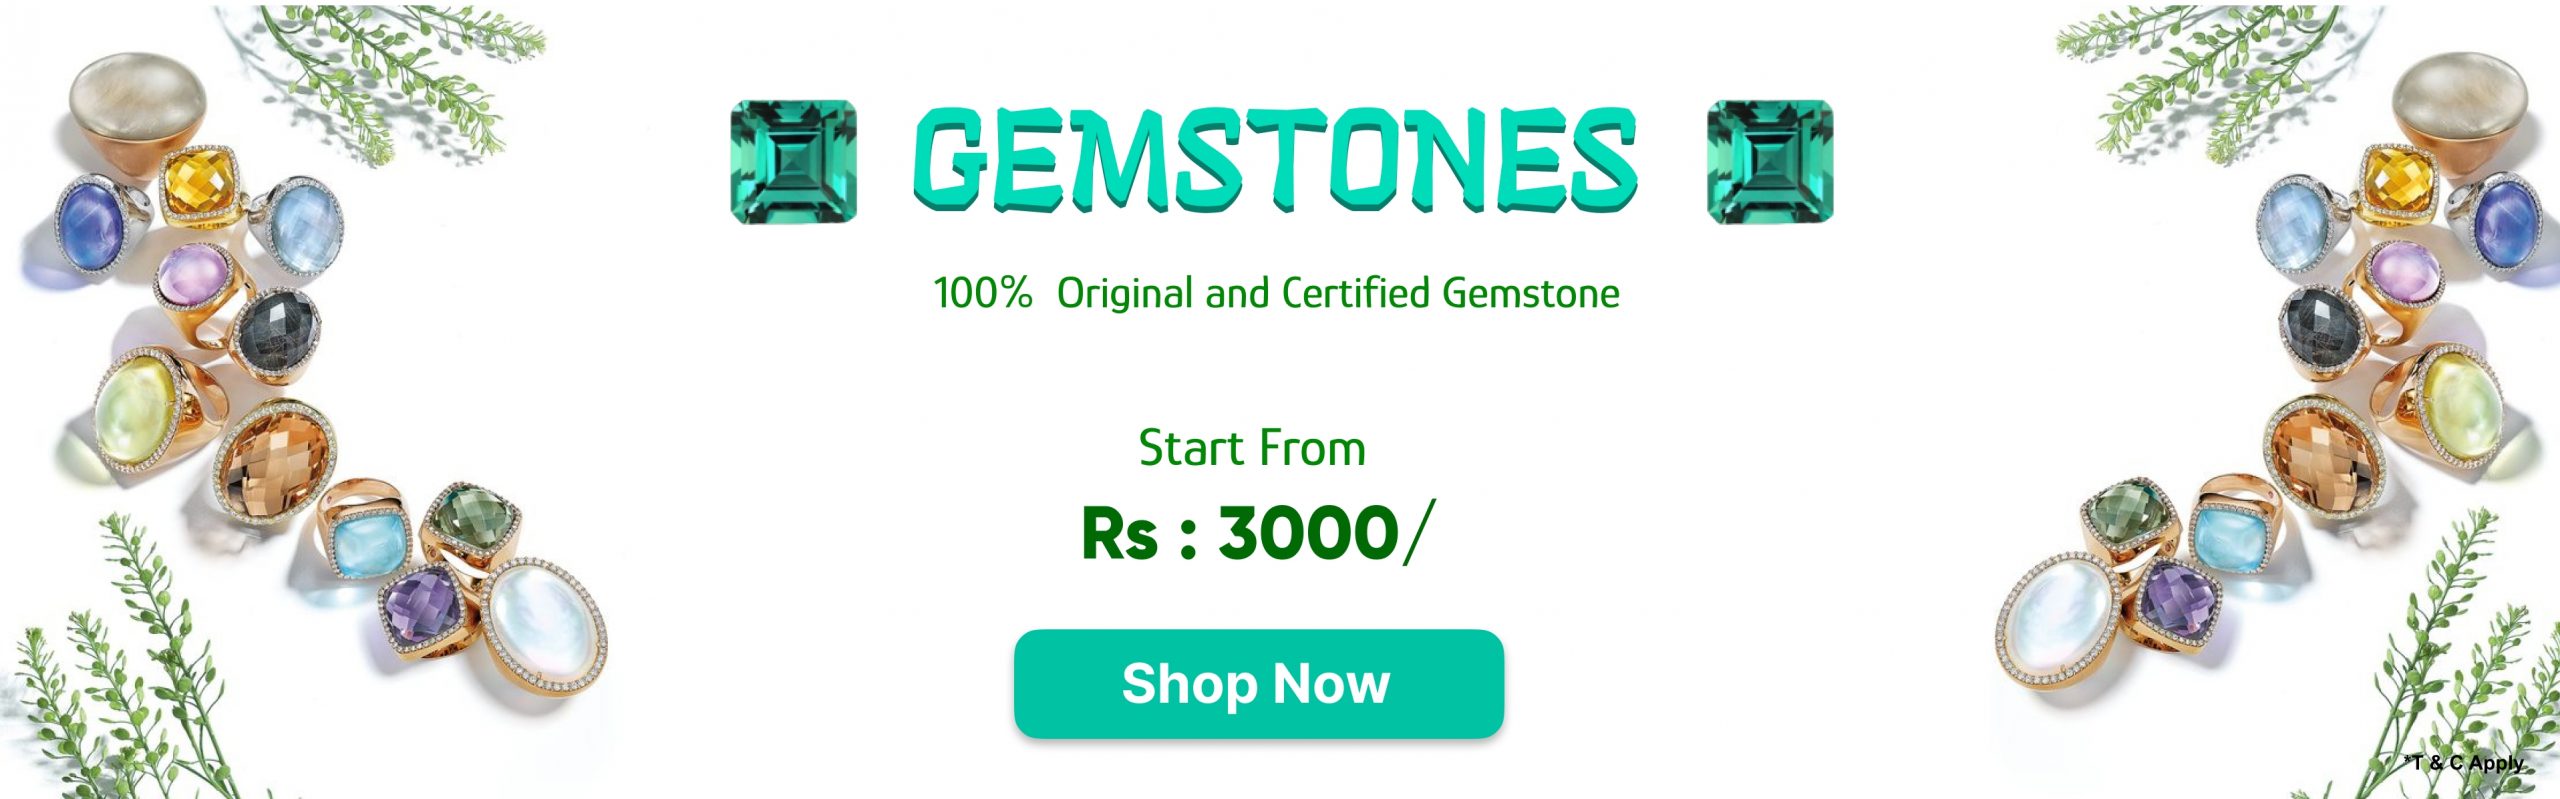 Shop Gemstones